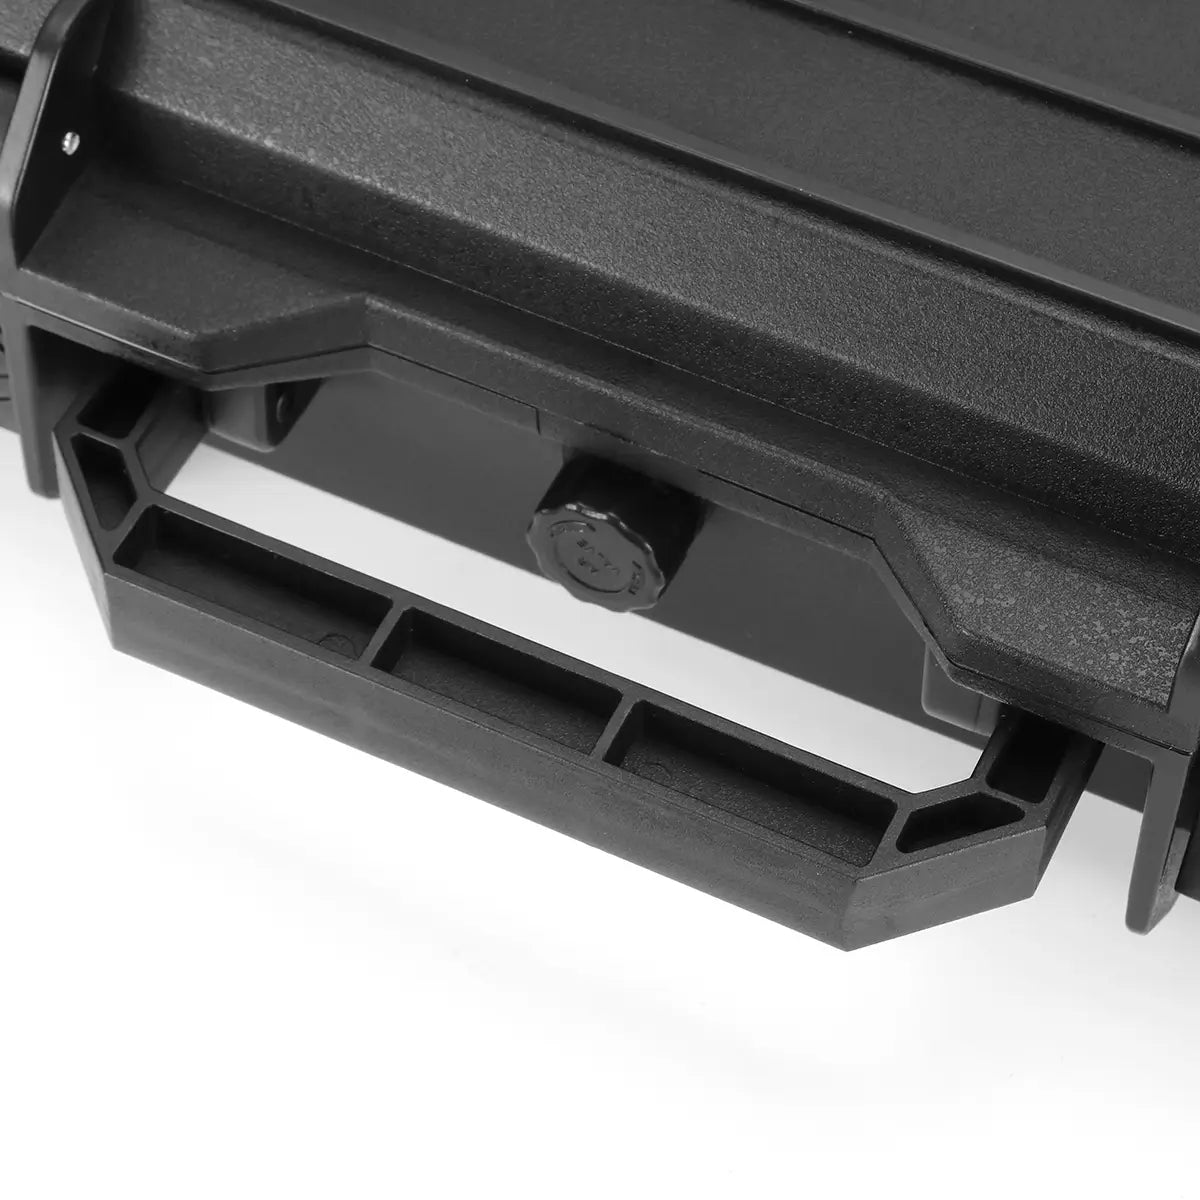 Waterproof Hard Carry Case Tool Kits Impact Resistant